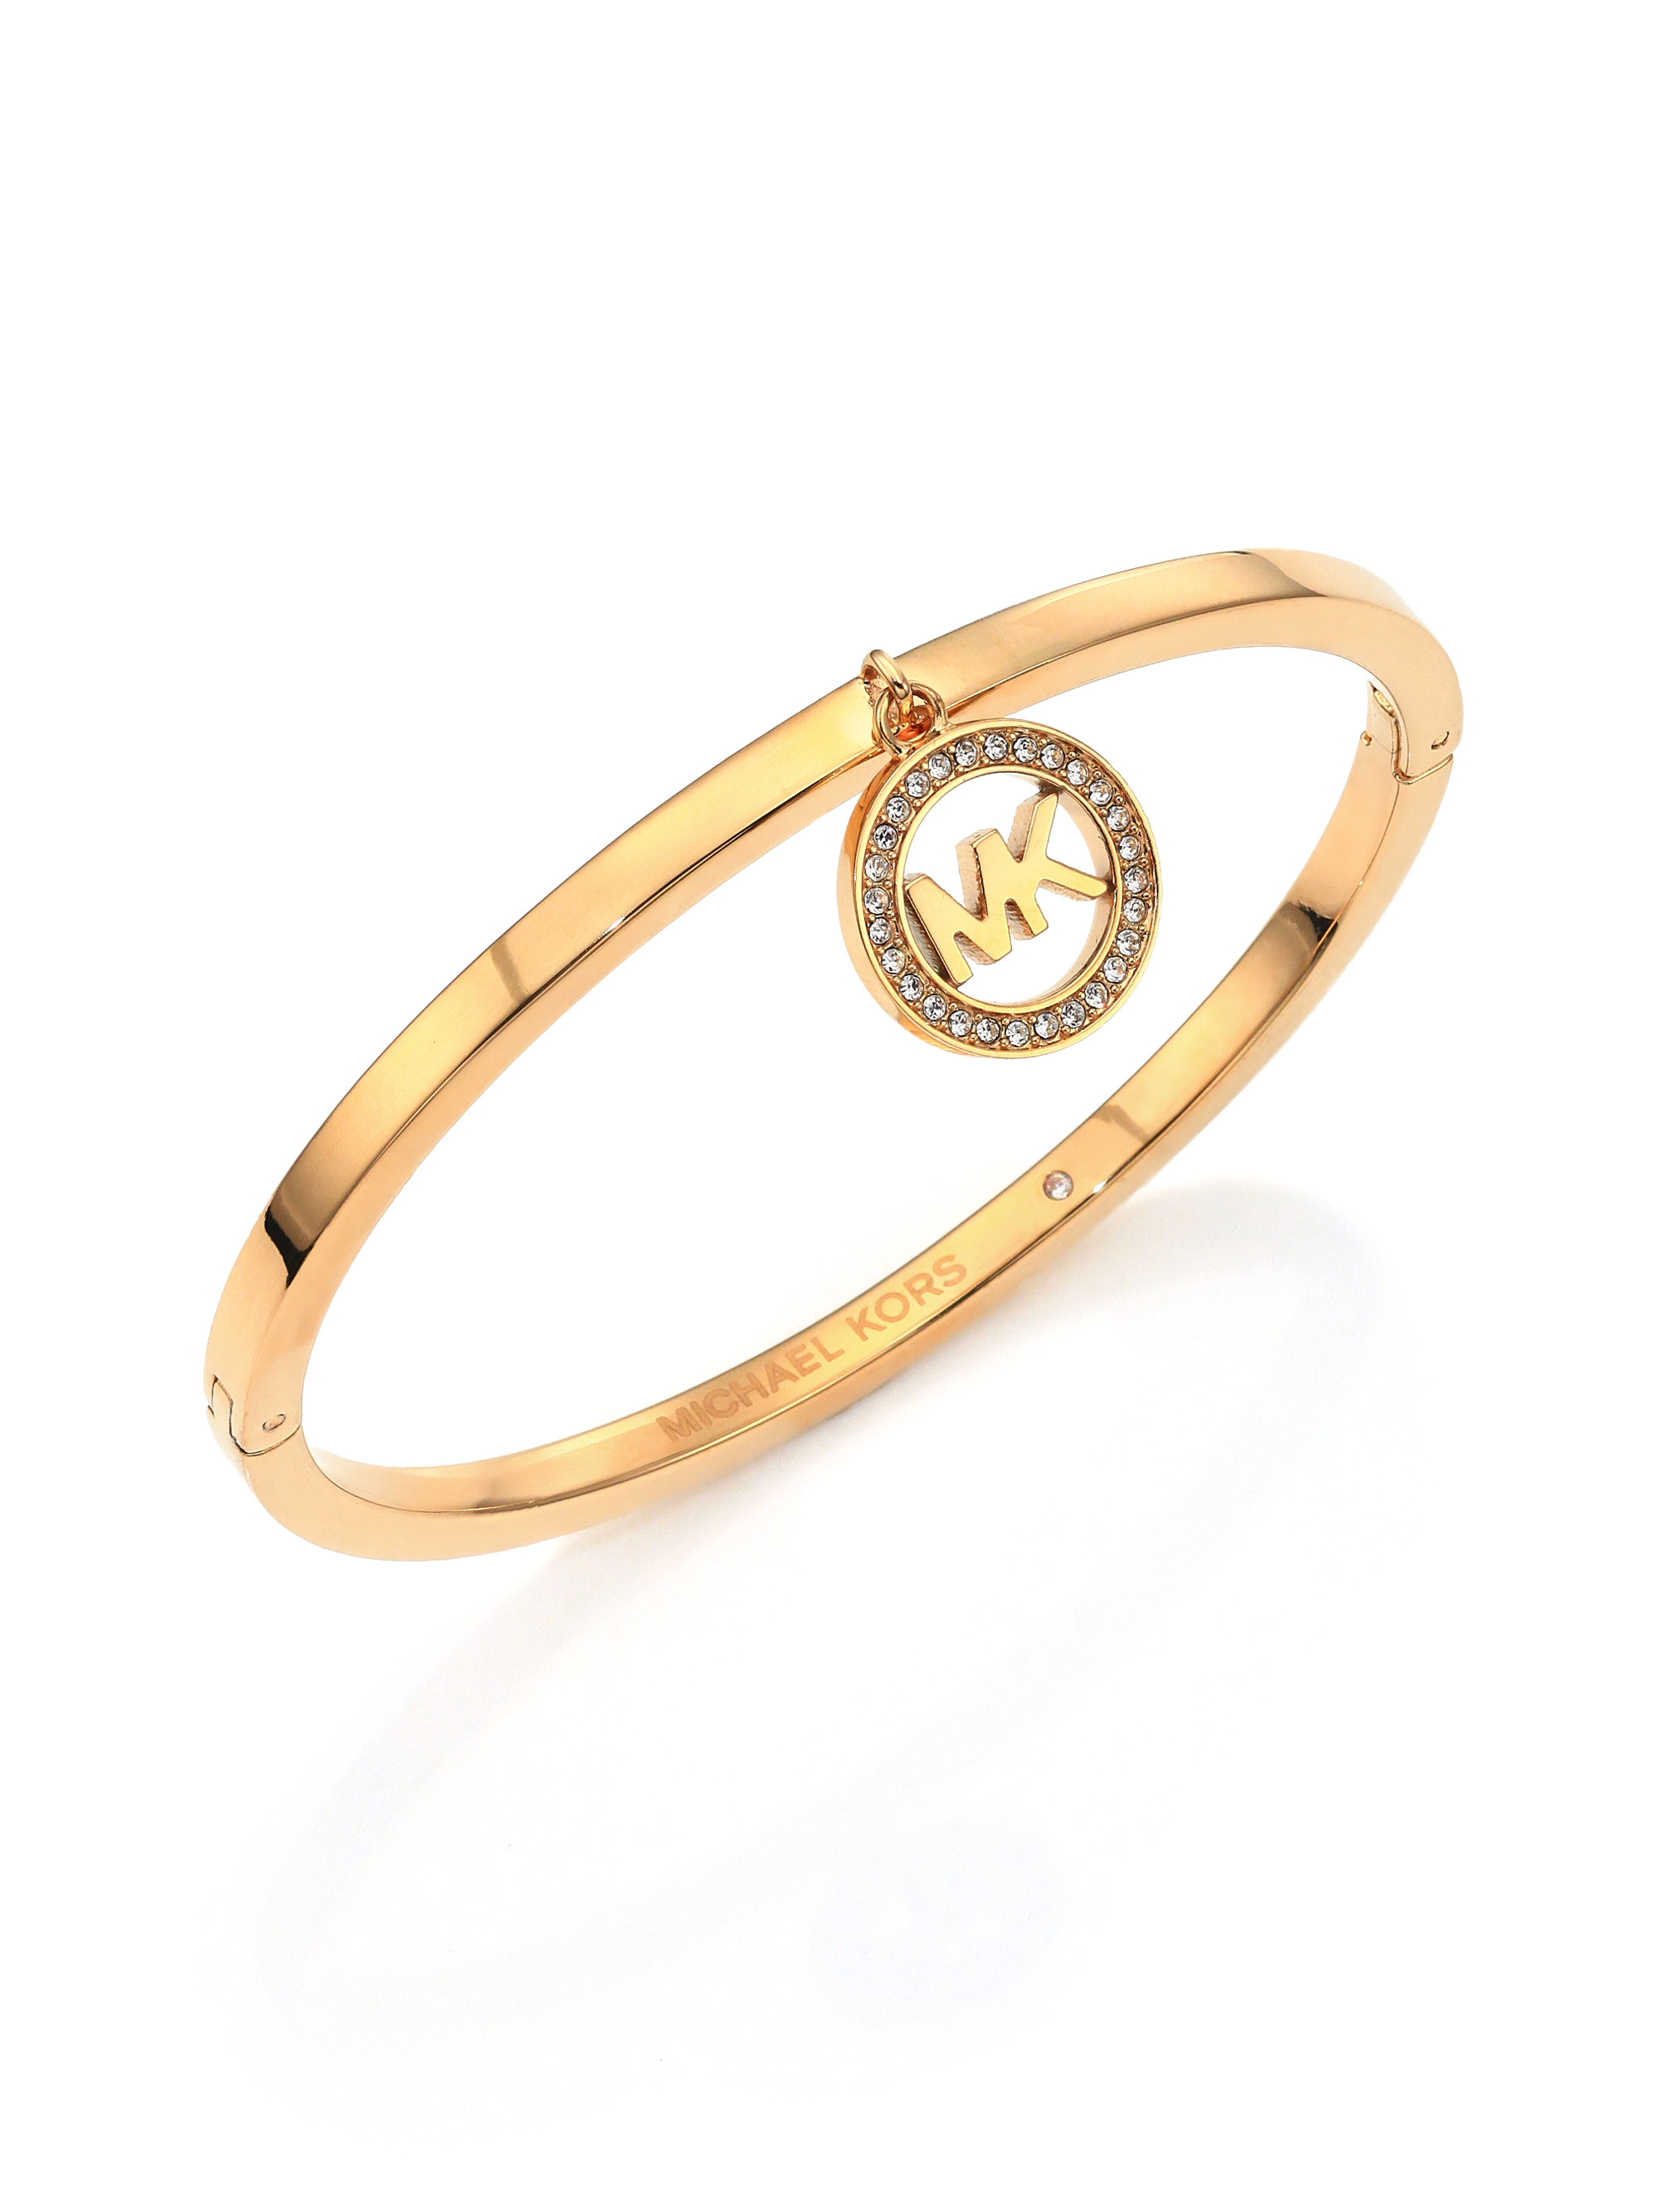 Lyst - Michael Kors Fulton Logo Charm Bangle Bracelet/goldtone in Metallic